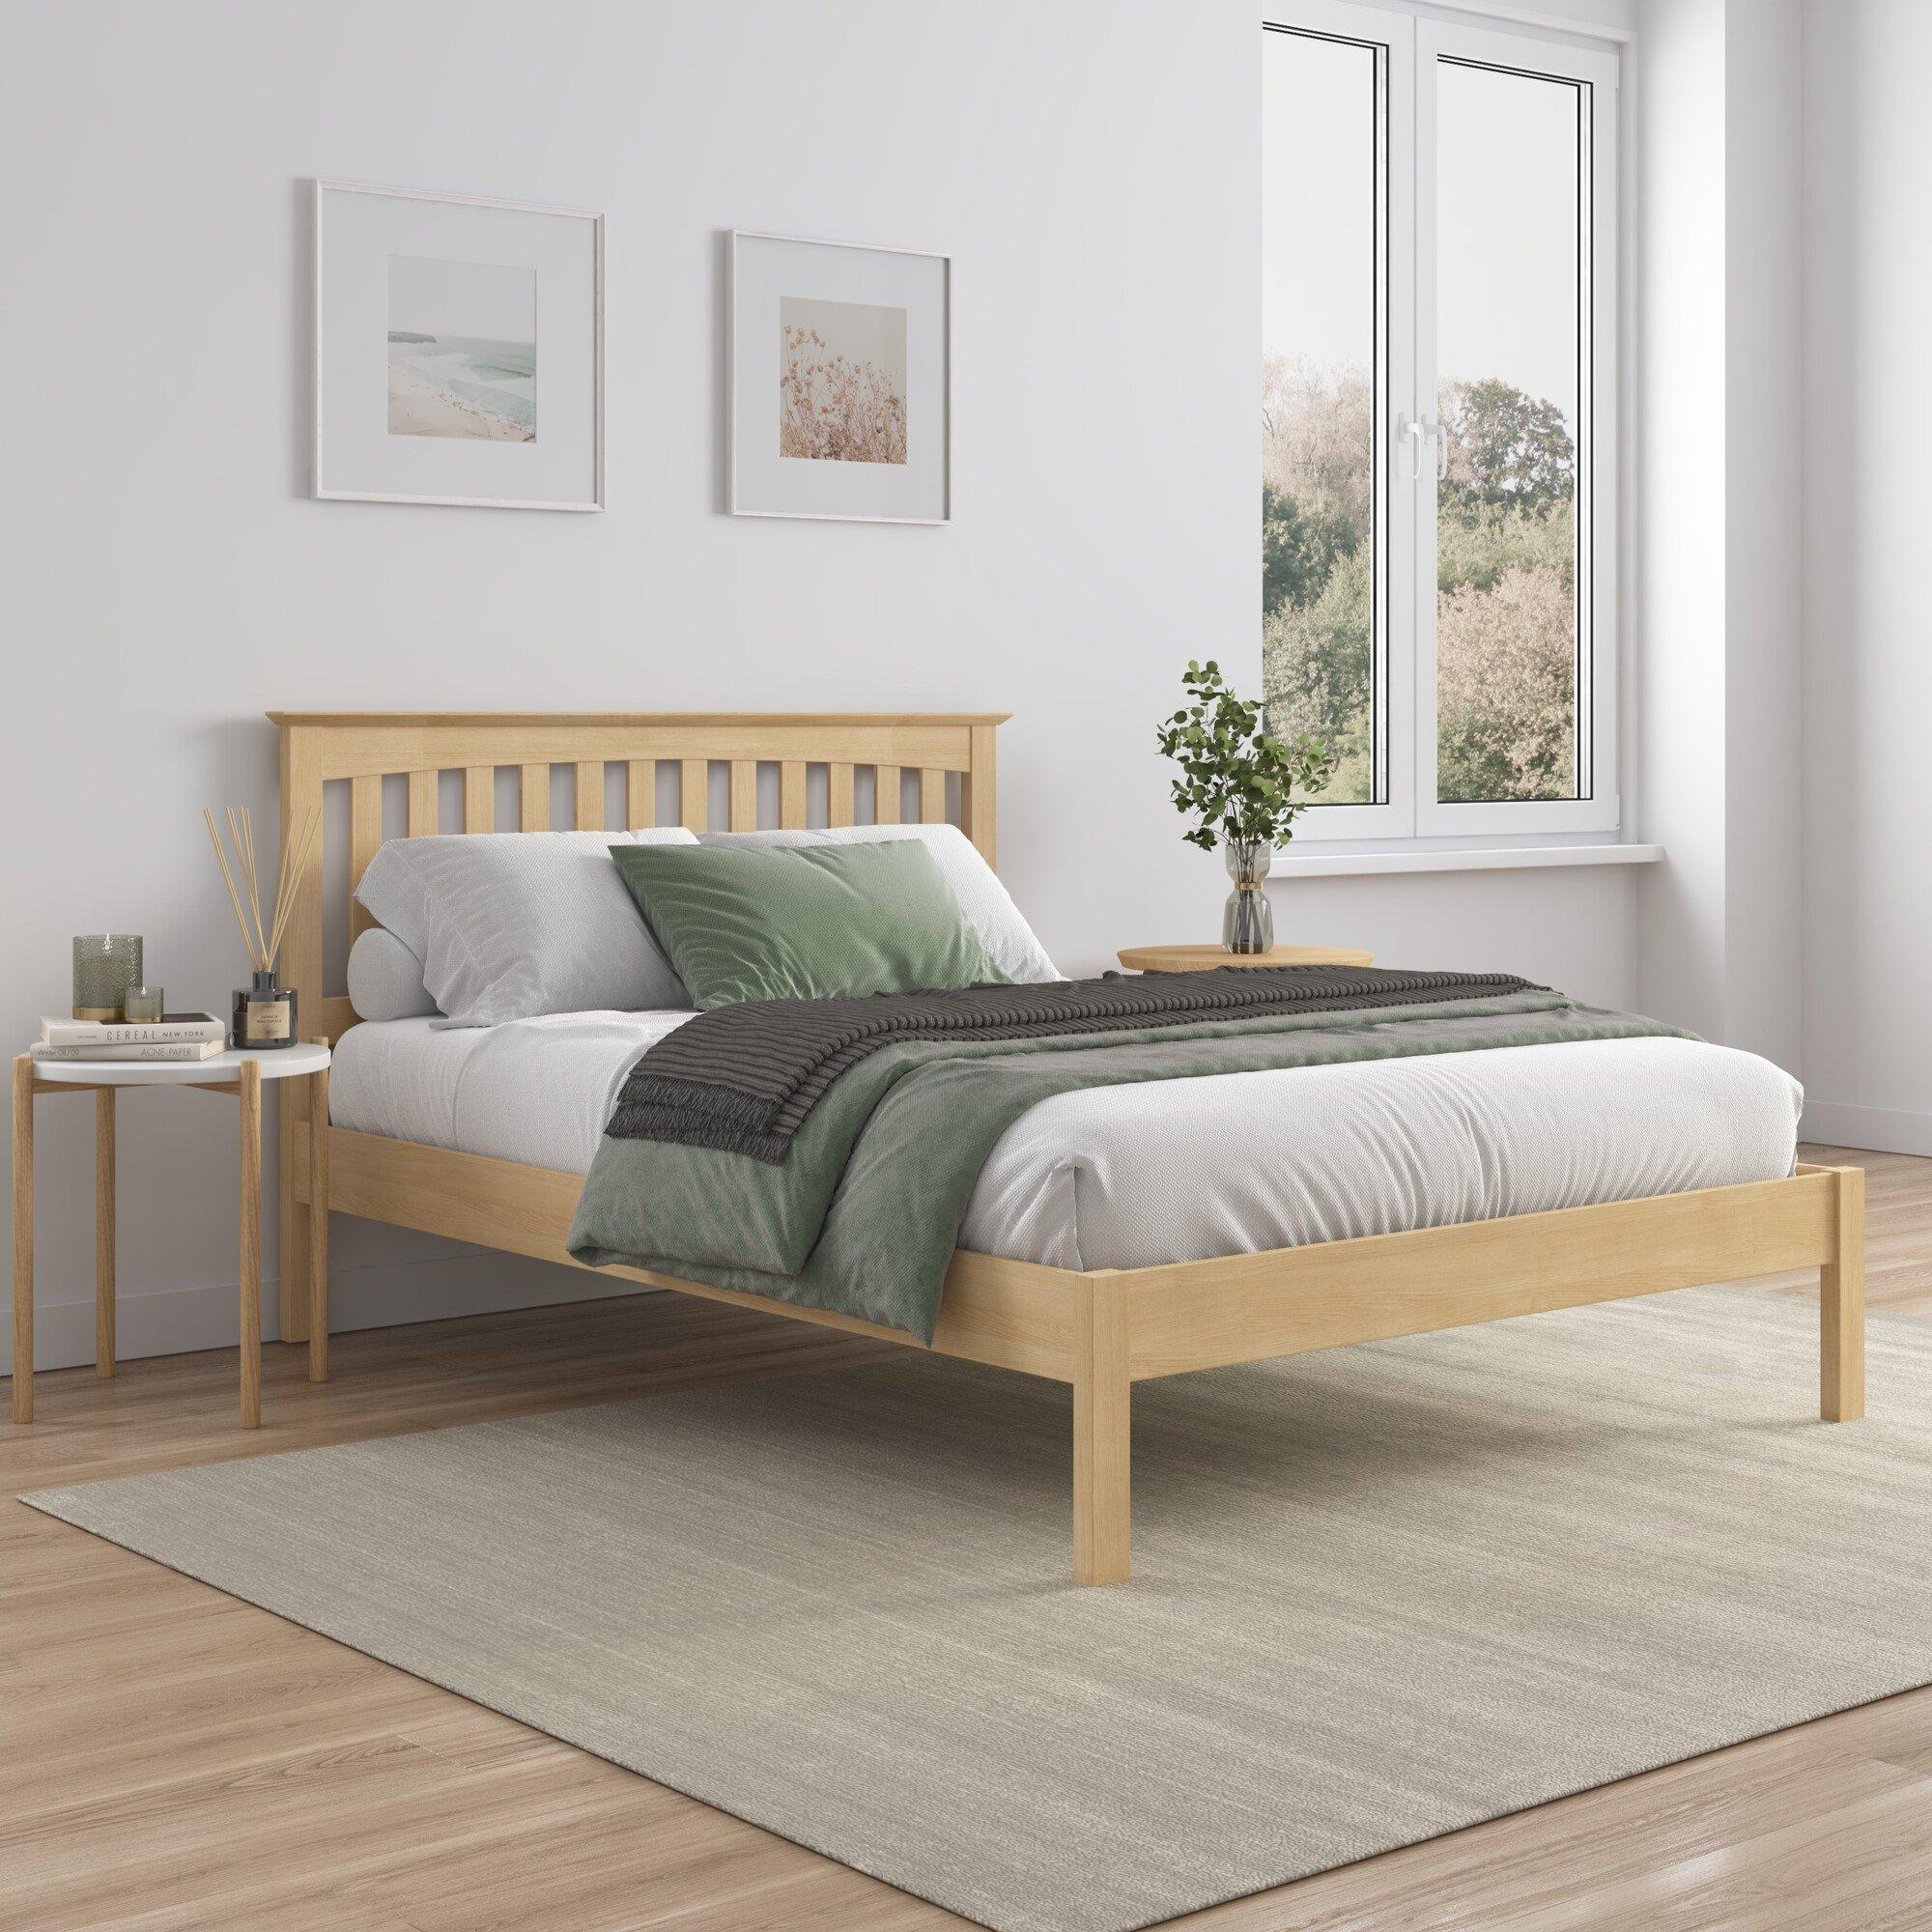 Dunkeld Solid Wooden Oak Low Footboard Shaker Style Bed Frame